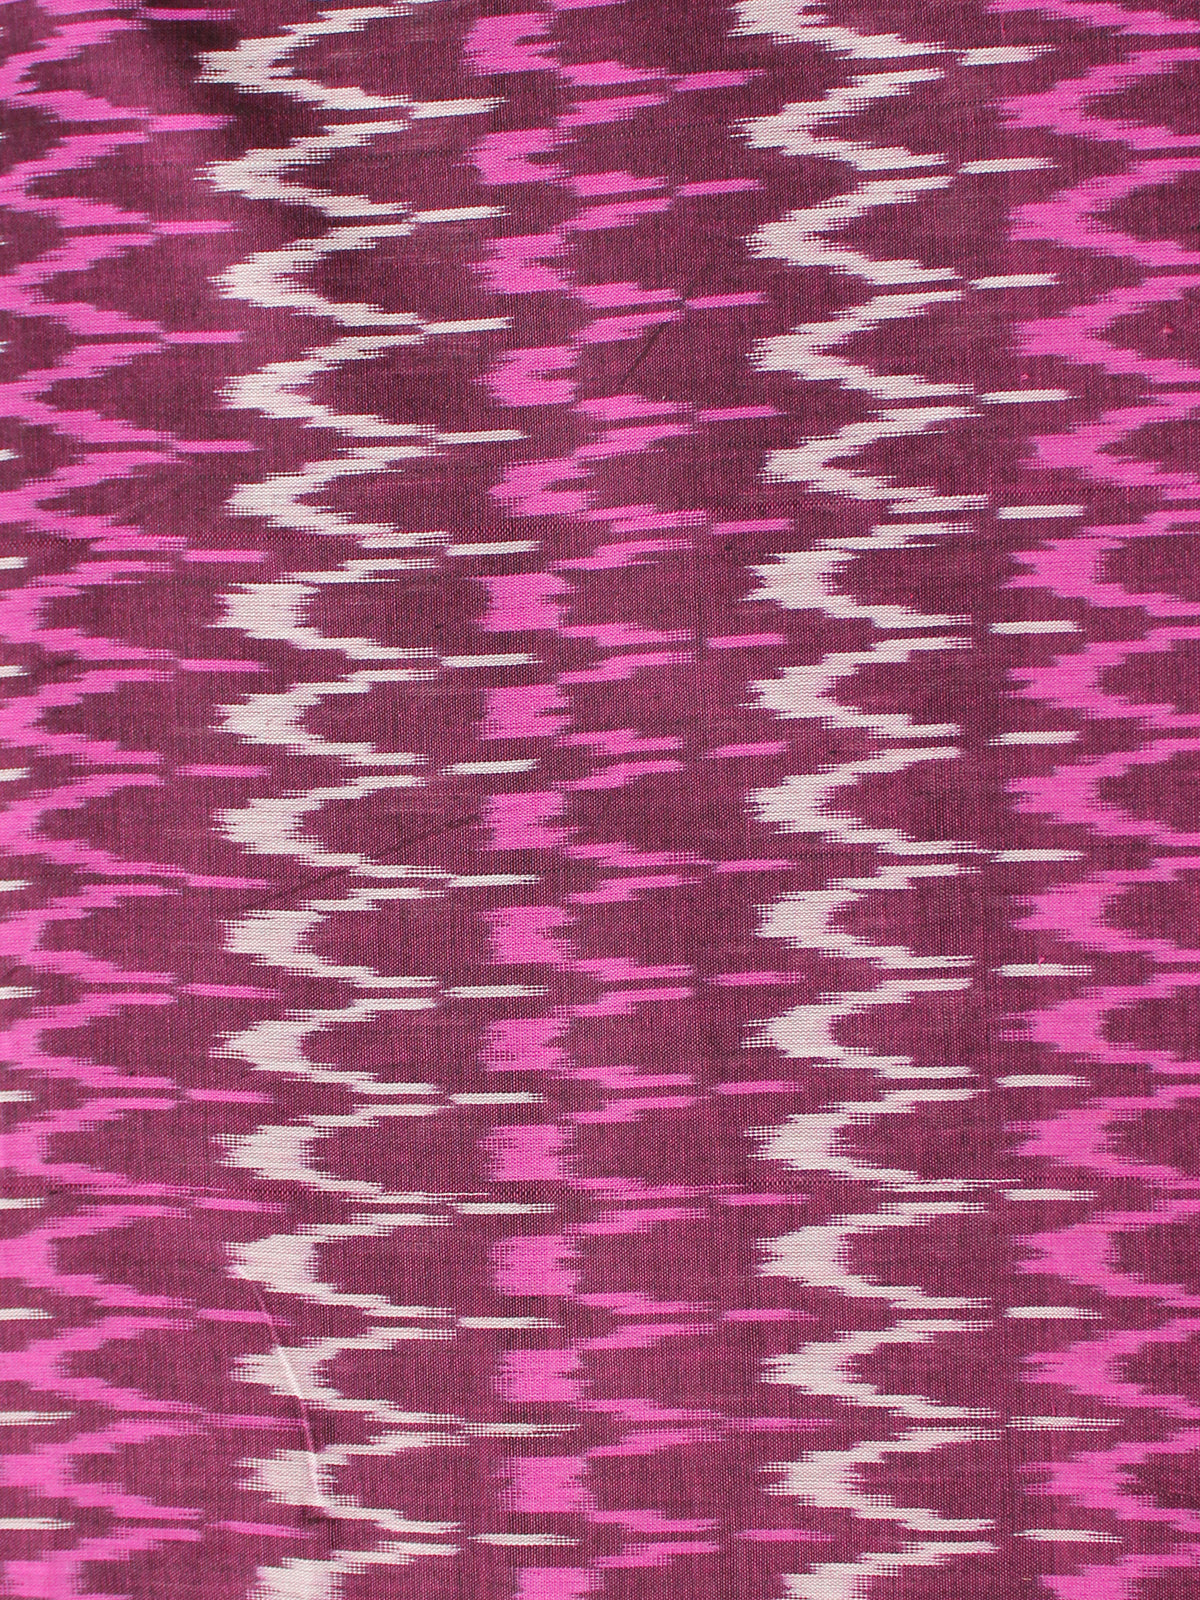 Wine Red Pink White Pochampally Hand Weaved Ikat Mercerised Cotton Fabric Per Meter - F002F1989